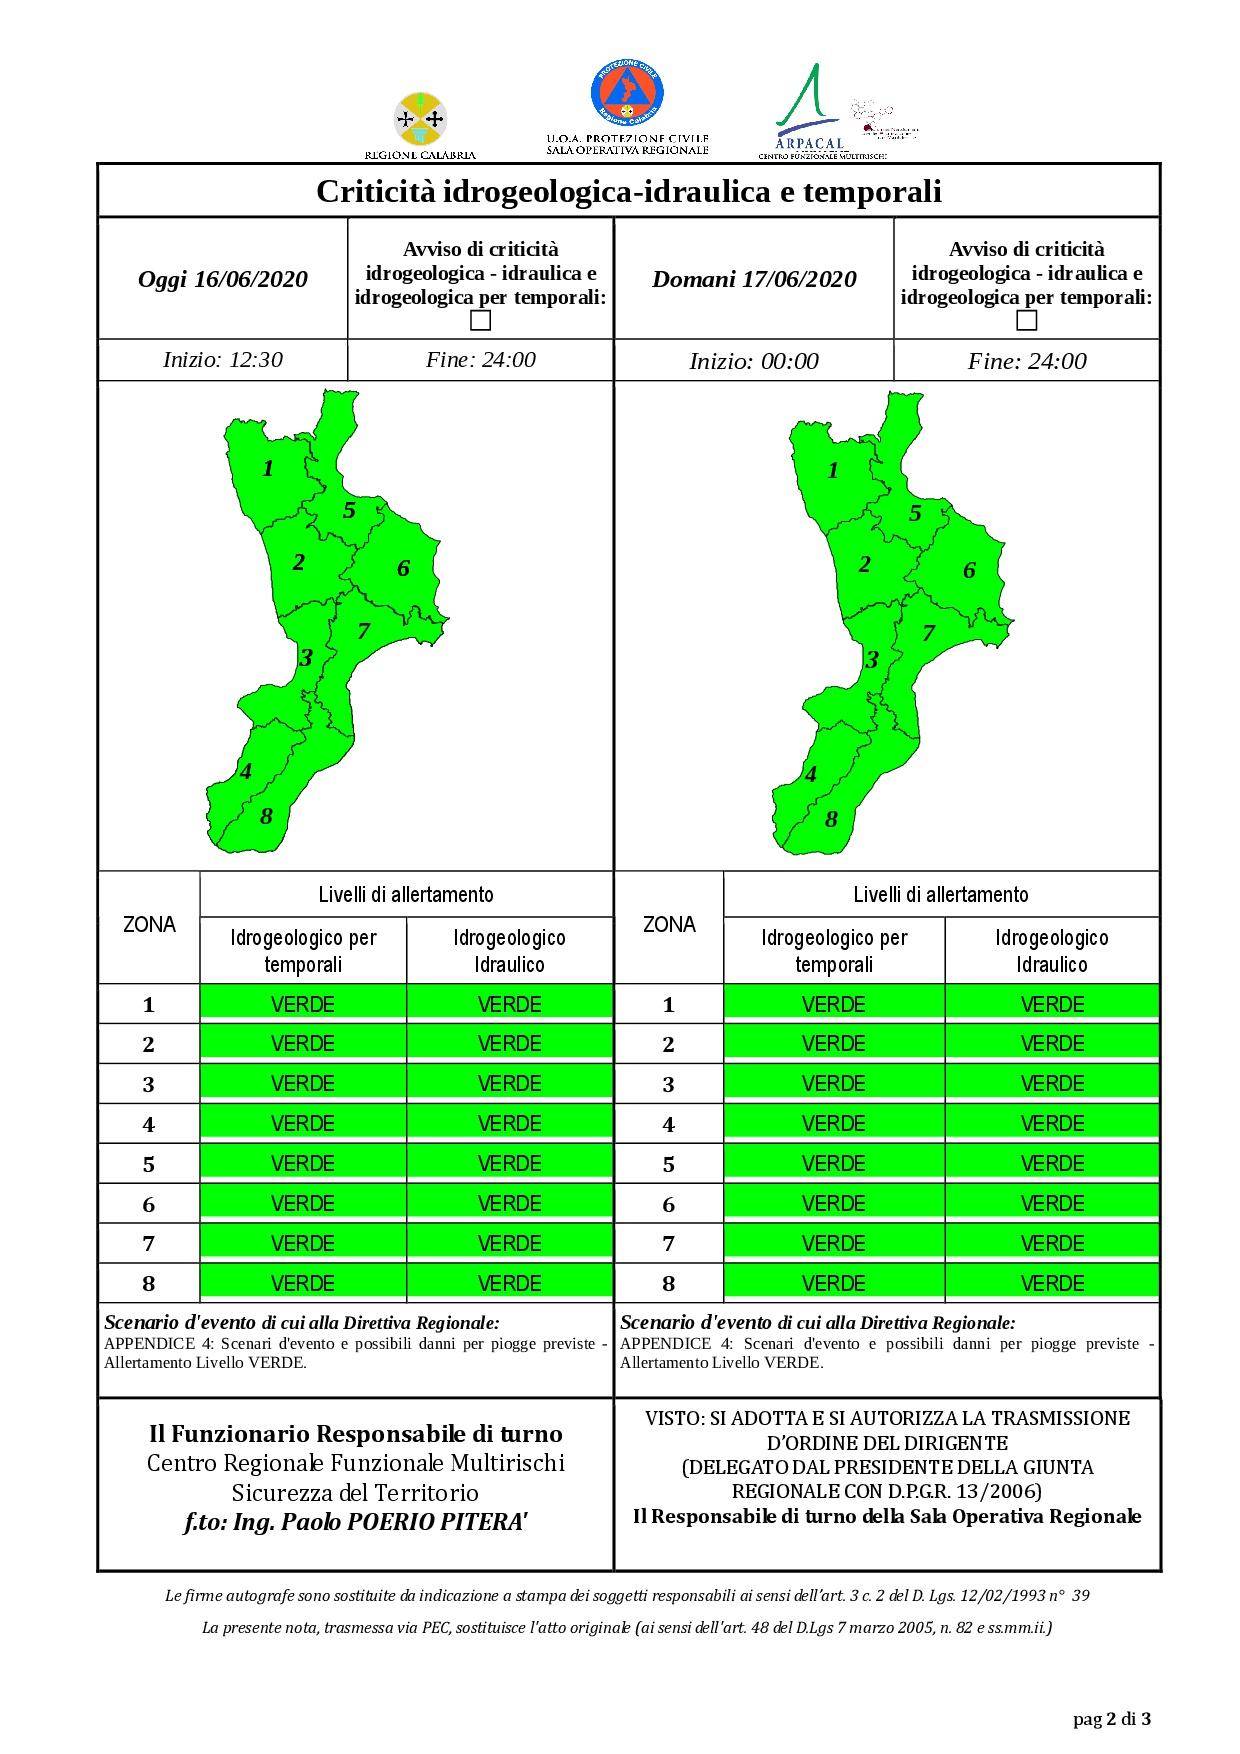 Criticità idrogeologica-idraulica e temporali in Calabria 16-06-2020